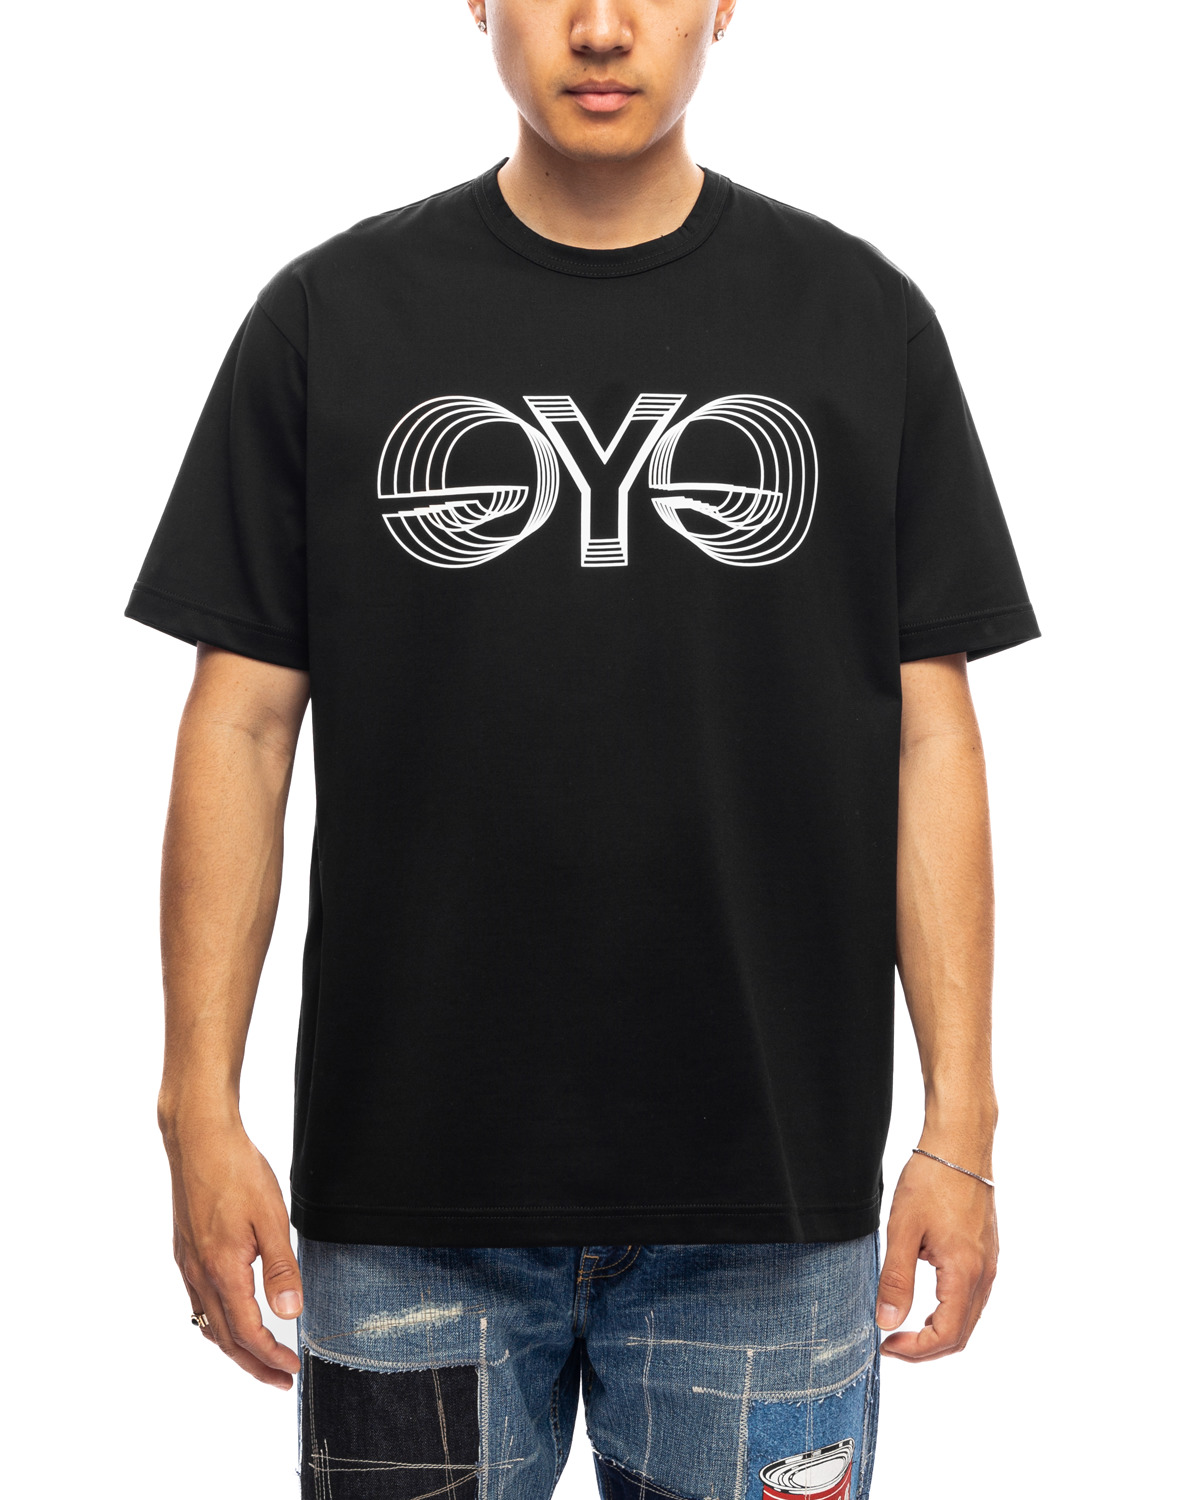 eYe Graphic T Shirt Black - 1